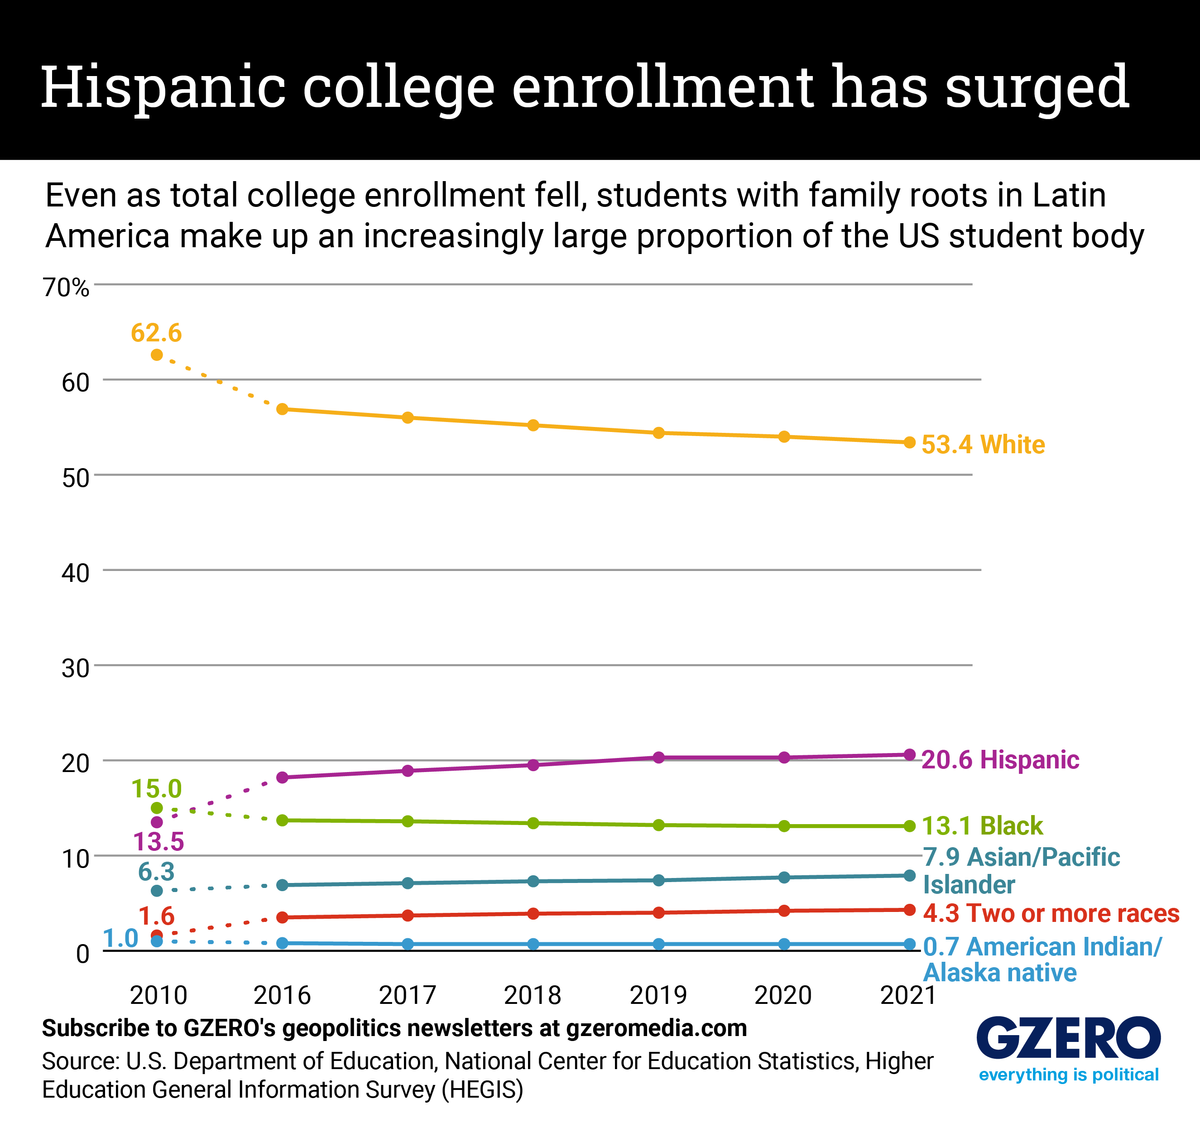 Racial makeup of undergraduate students in the U.S. (2010-2021)